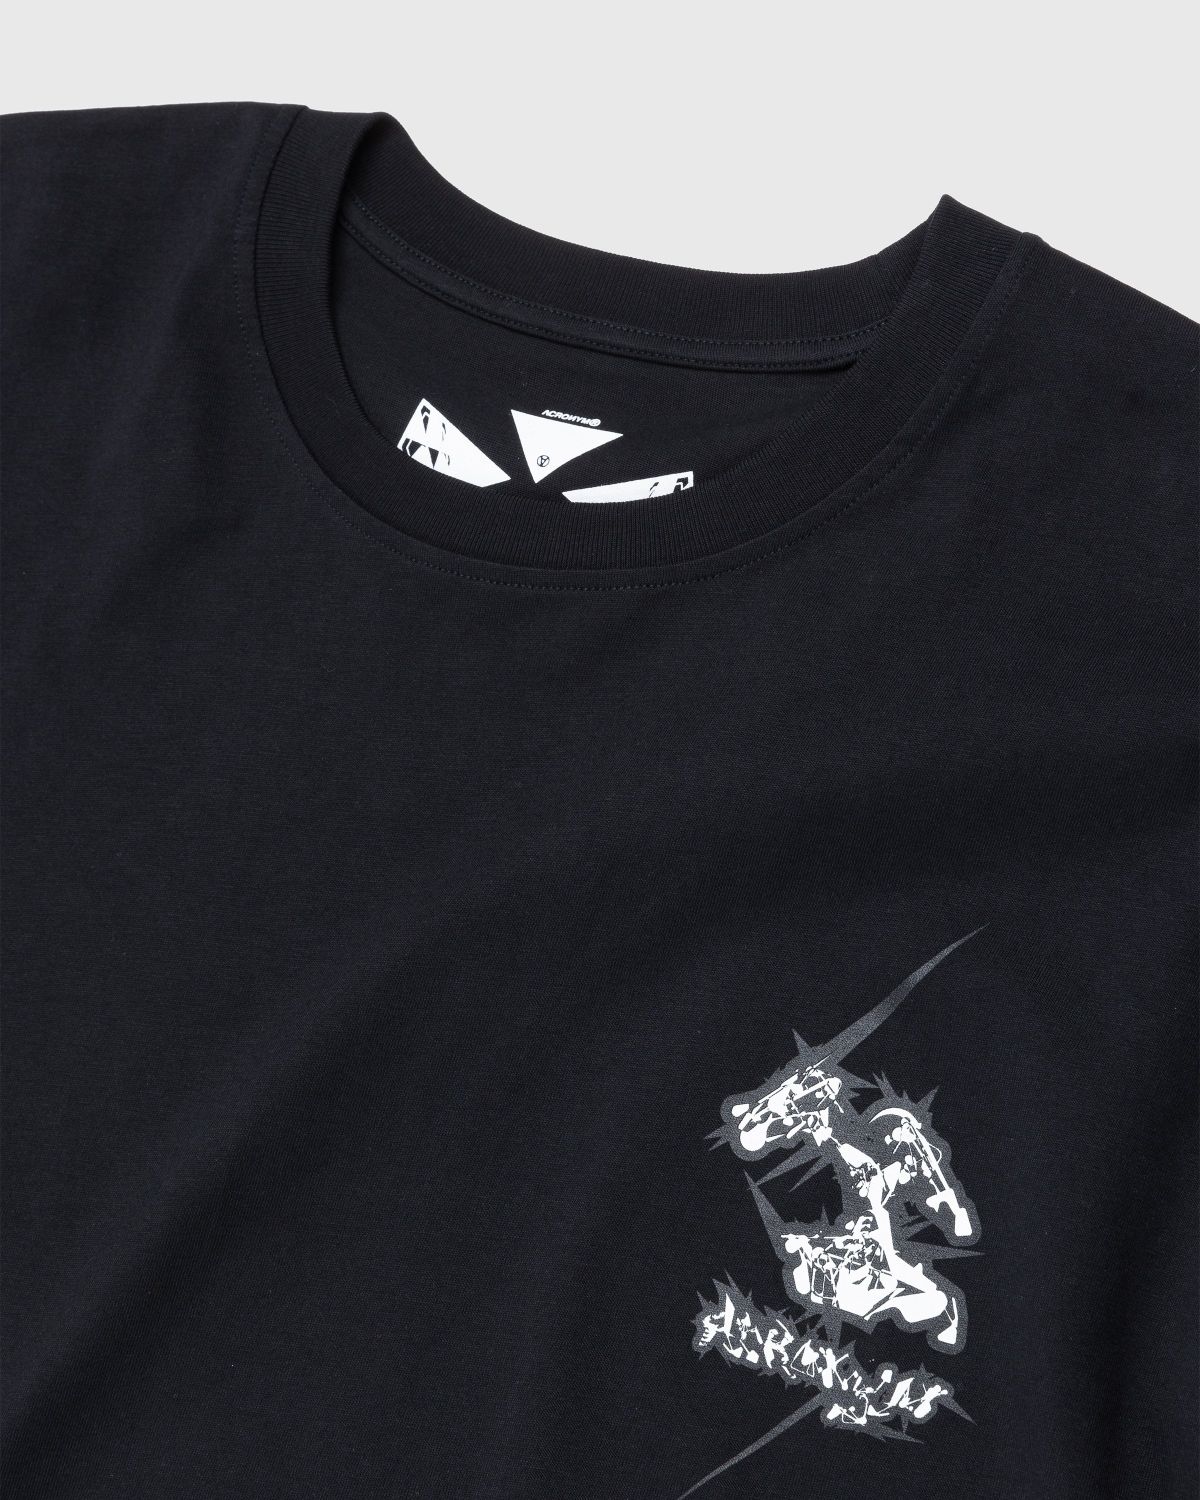 ACRONYM – S29-PR-A Organic Cotton Longsleeve T-Shirt Black - Longsleeves - Black - Image 3